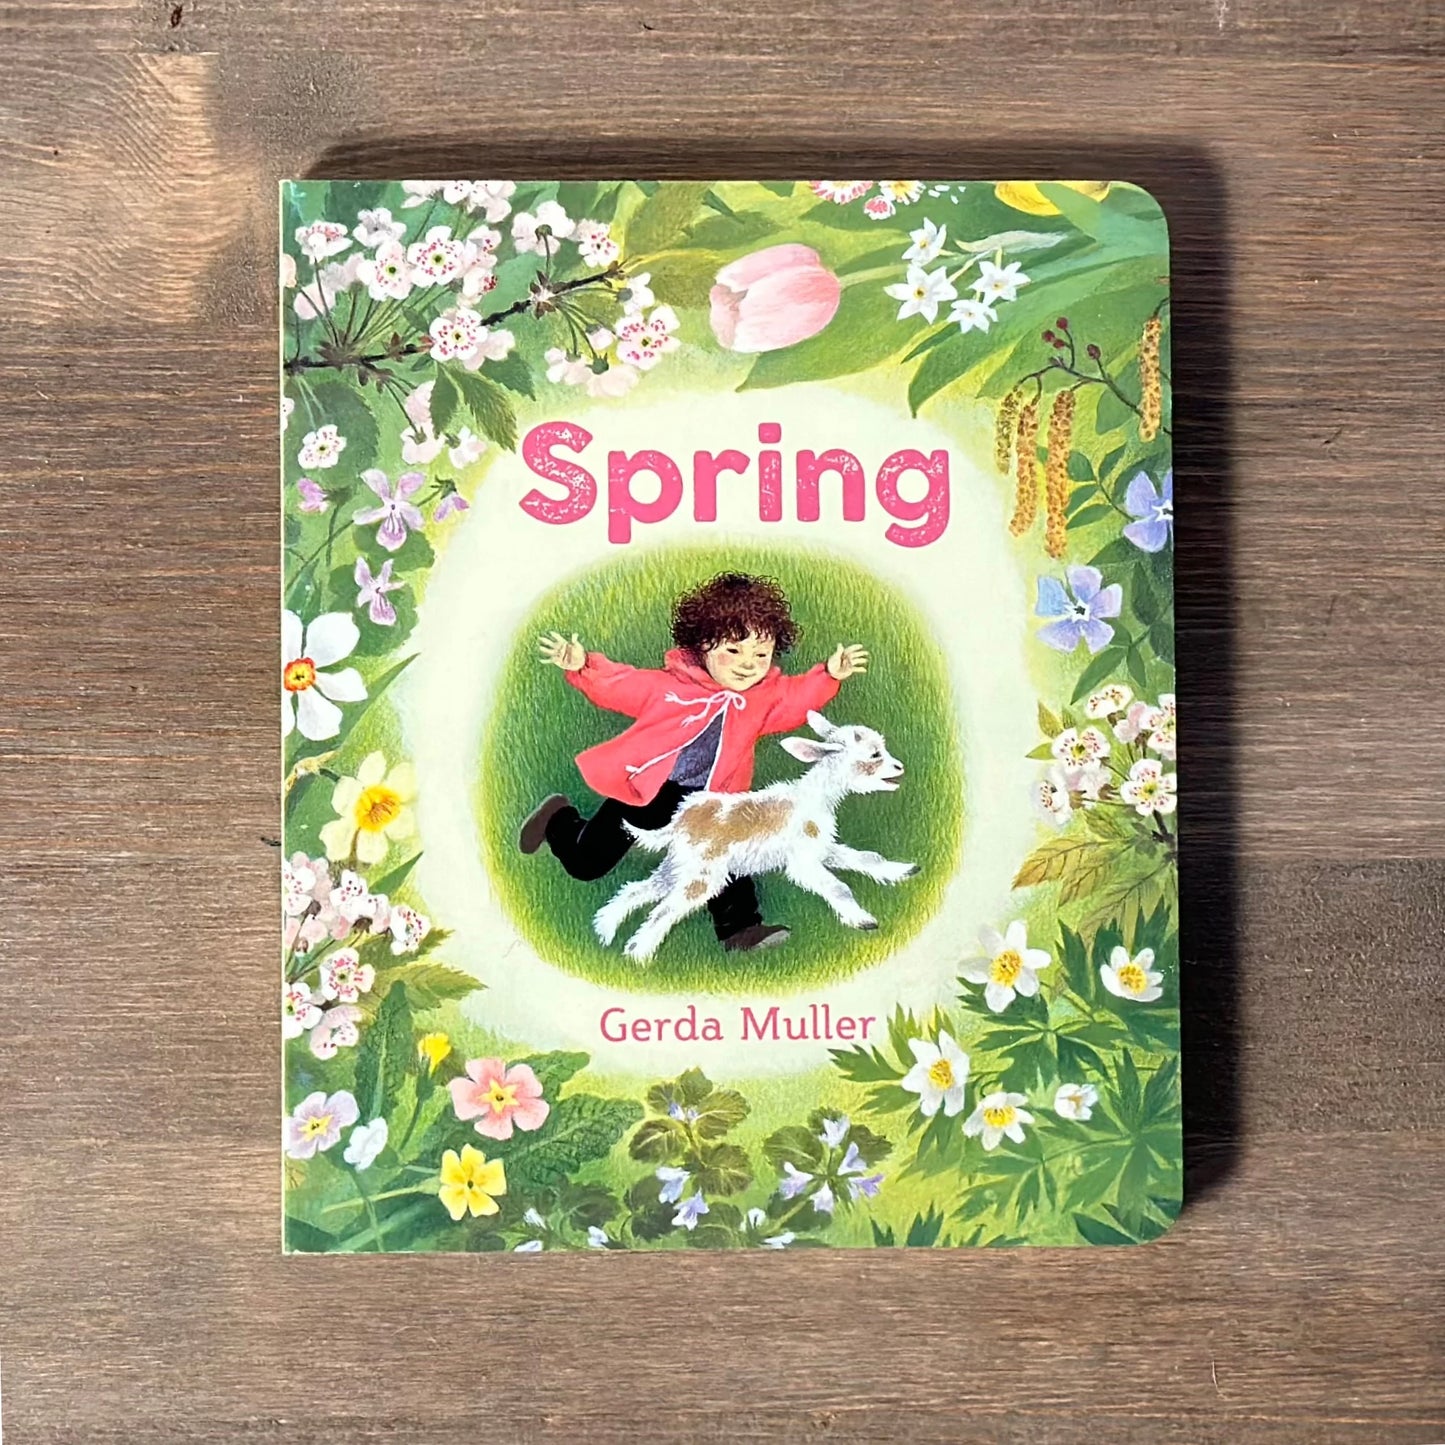 Spring by Gerda Muller - A Beautiful Picture Book - Alder & Alouette